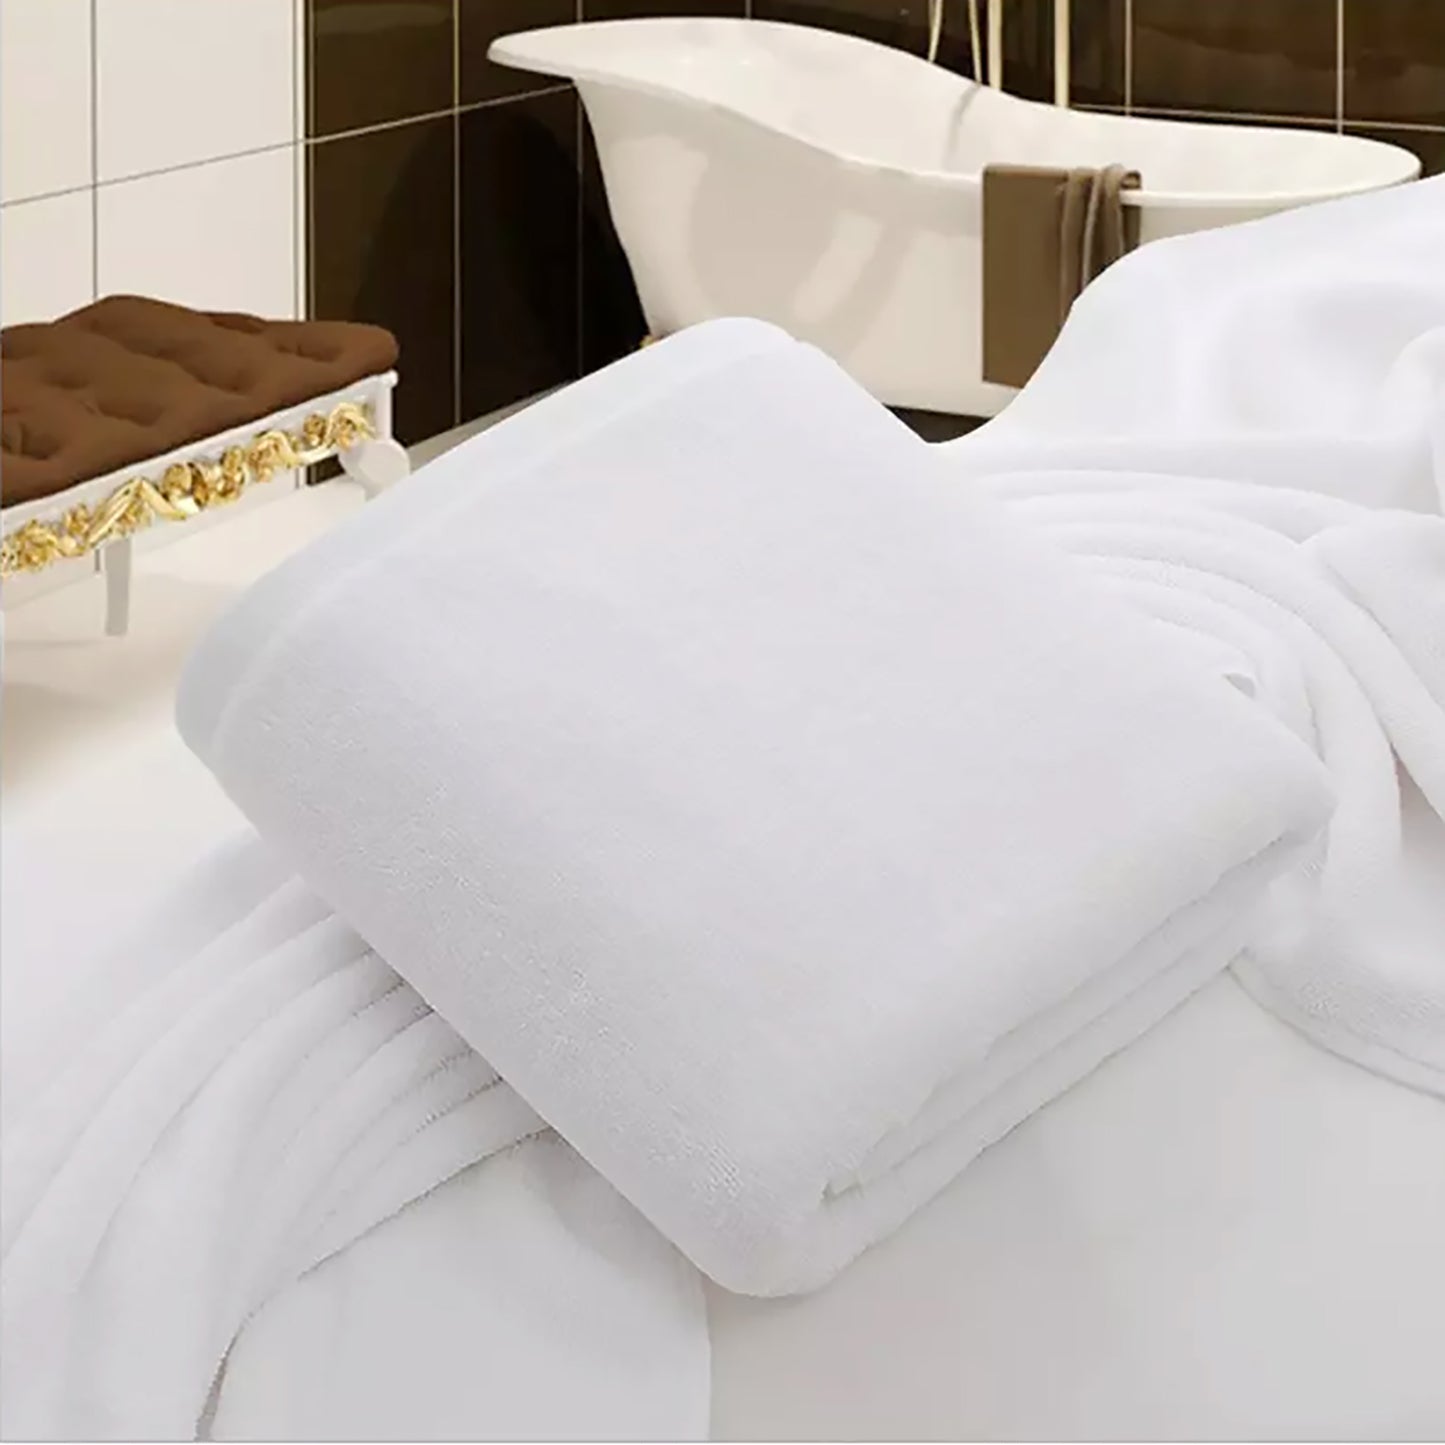 MistyMorning bath towel Egyptian cotton on sheets cotton uk towel sale cheap luxury sheets sale